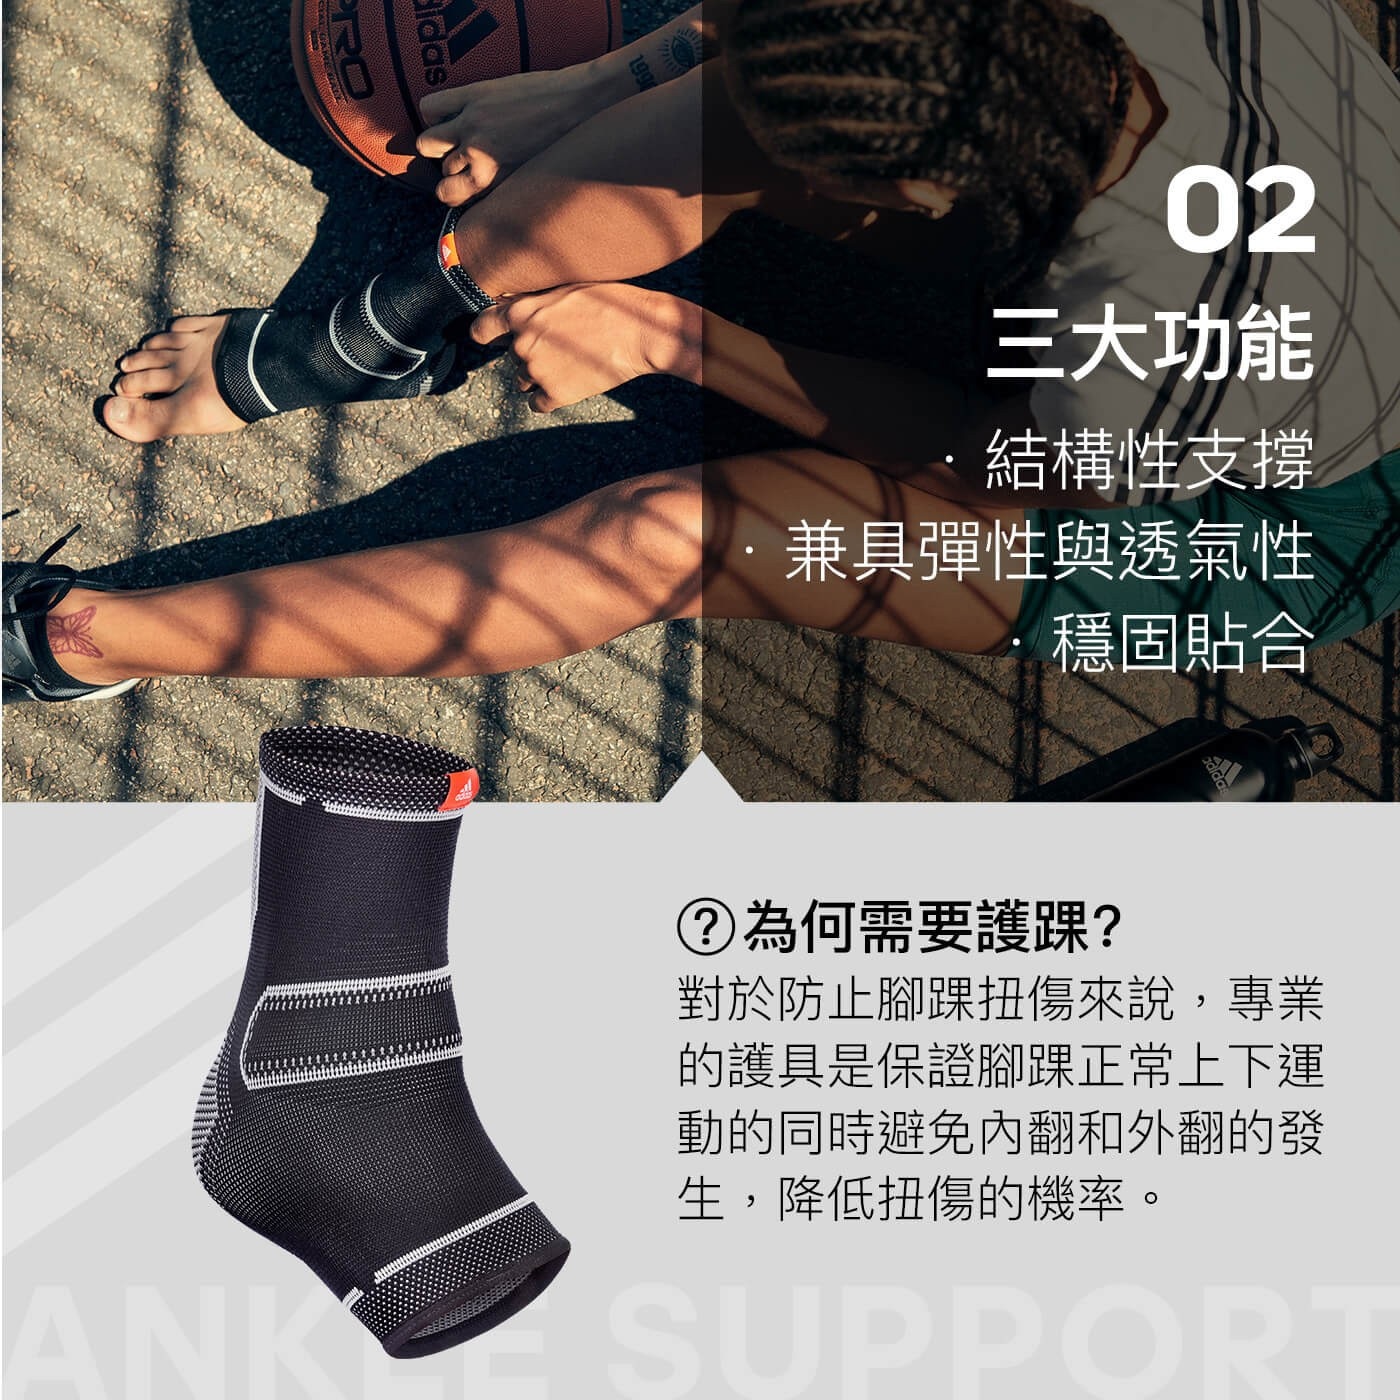 Adidas 踝關節用高性能護套 2入專業防護提供腳踝最基本的防護輕薄透氣就像穿上有防護功能的襪子讓運動更舒心